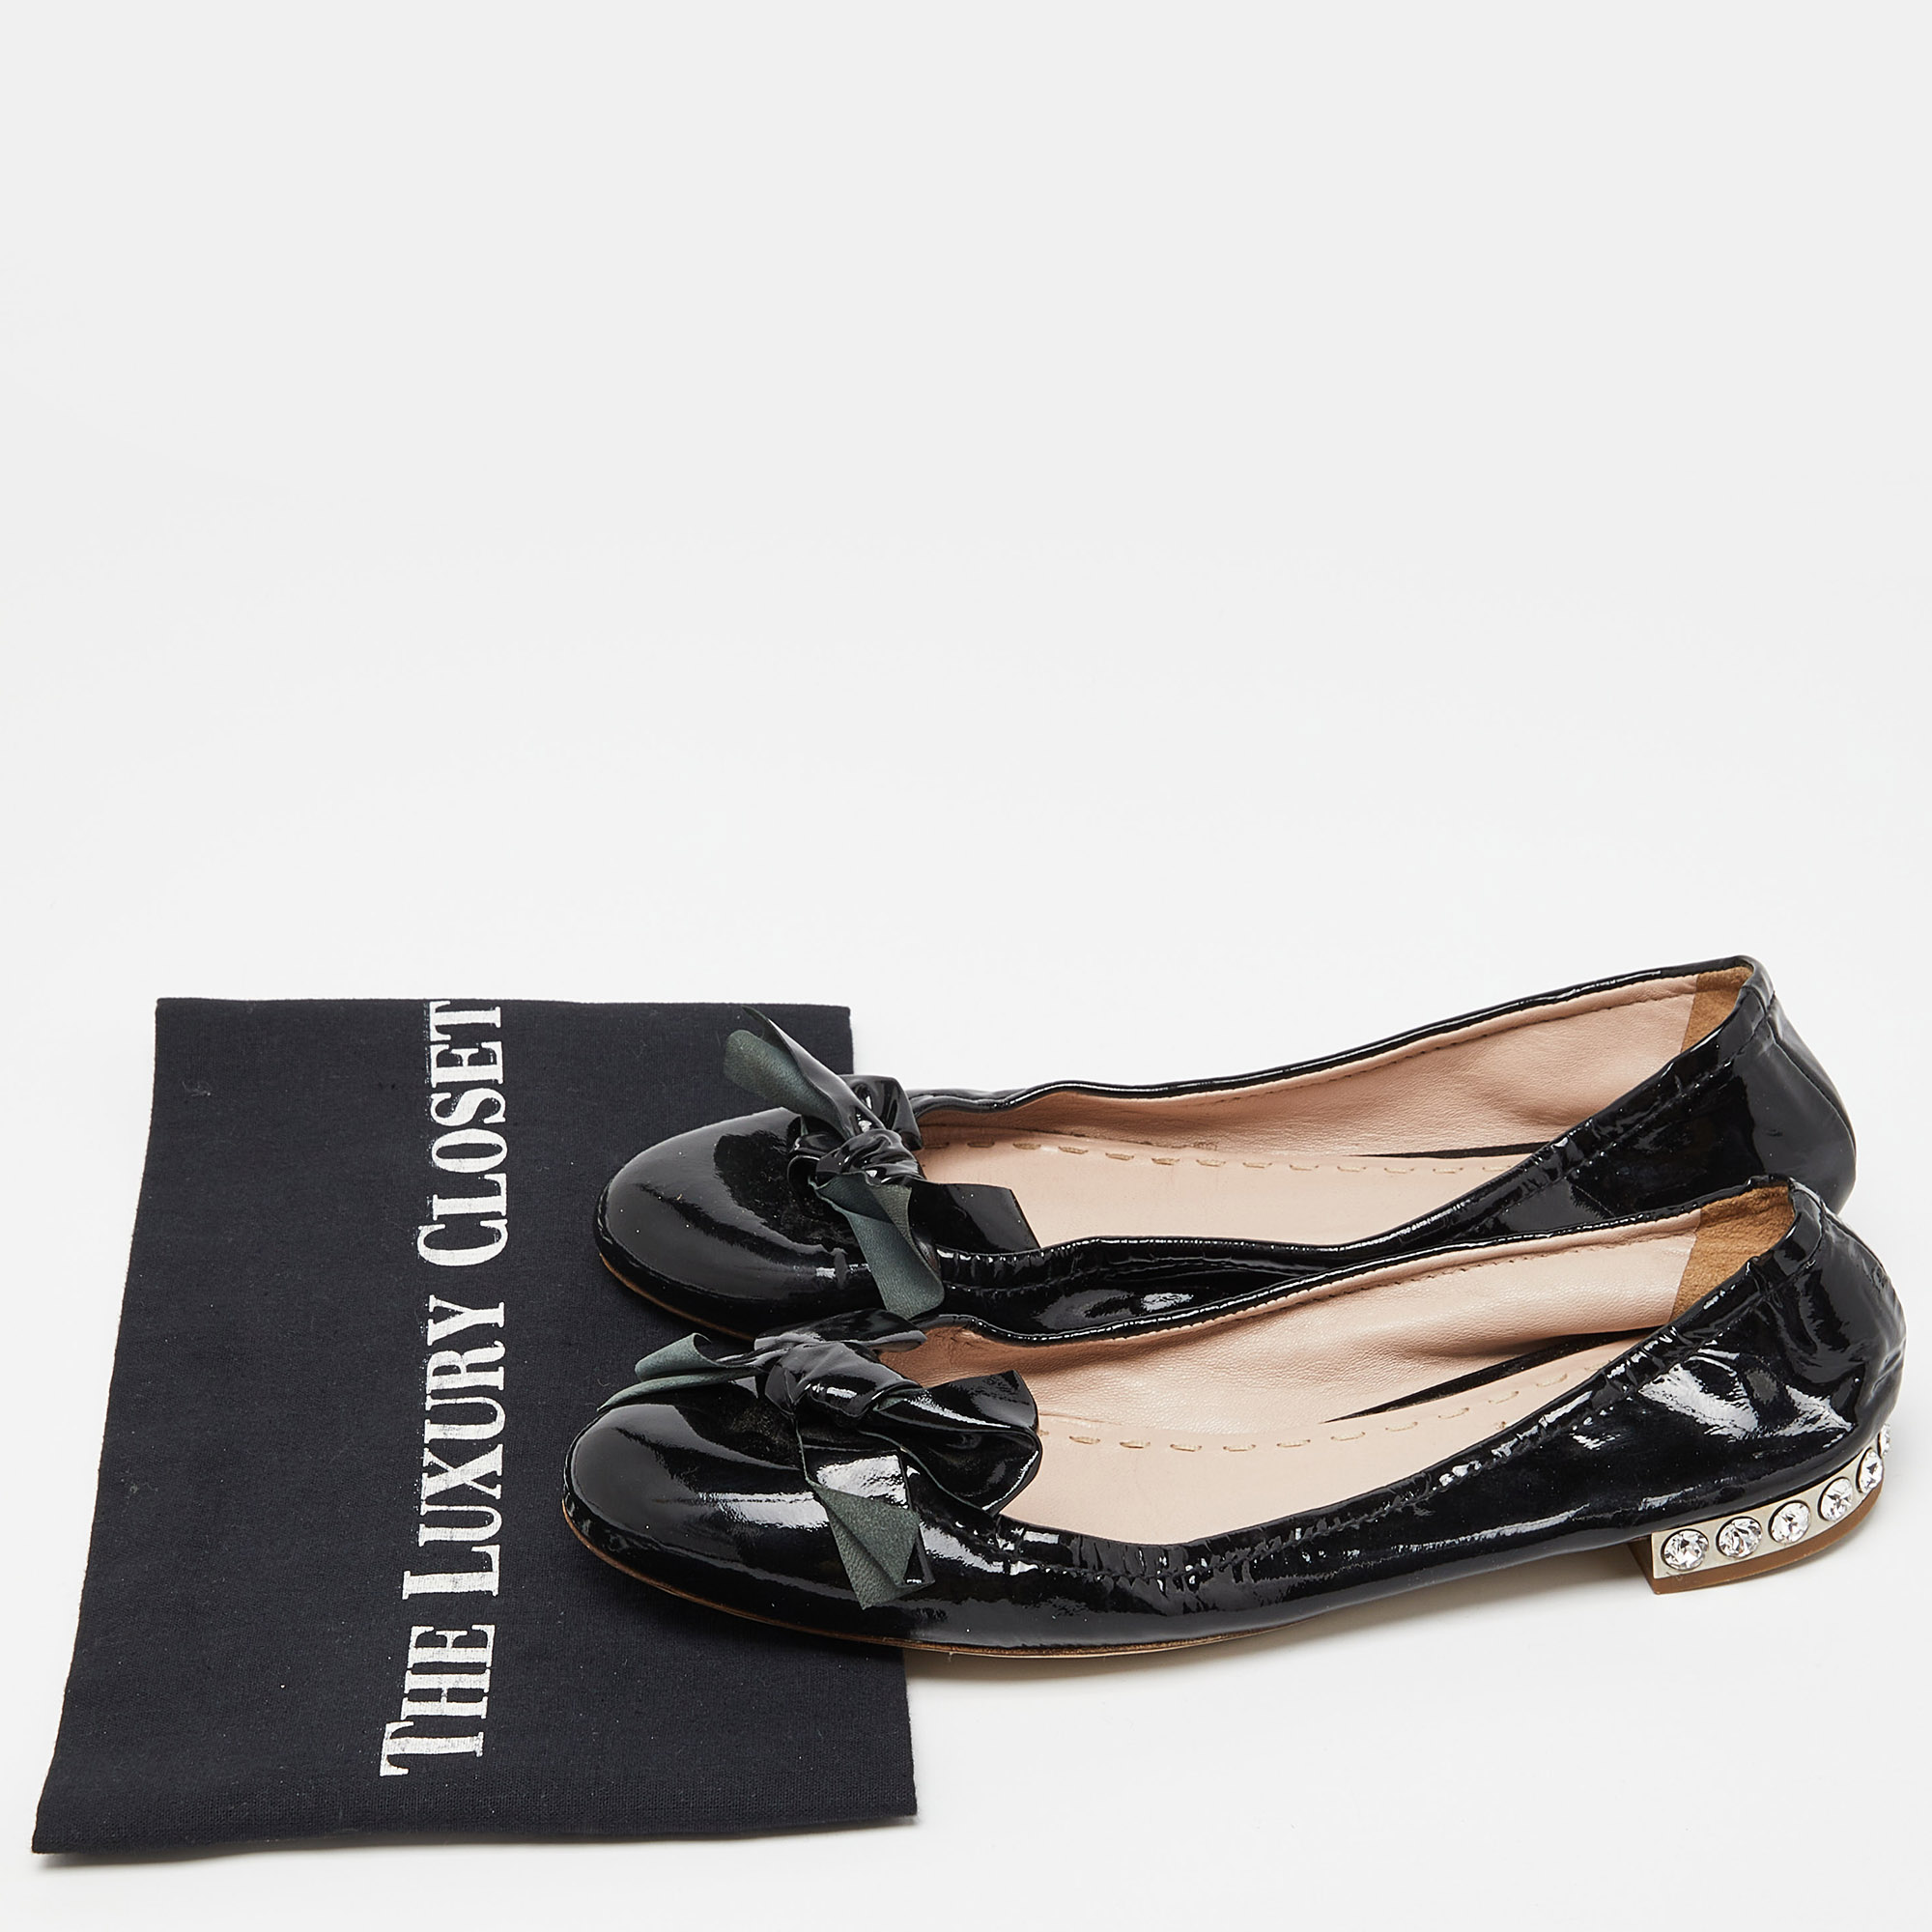 Miu Miu Black Patent Leather Crystal Embellished Bow Ballet Flats Size 37.5